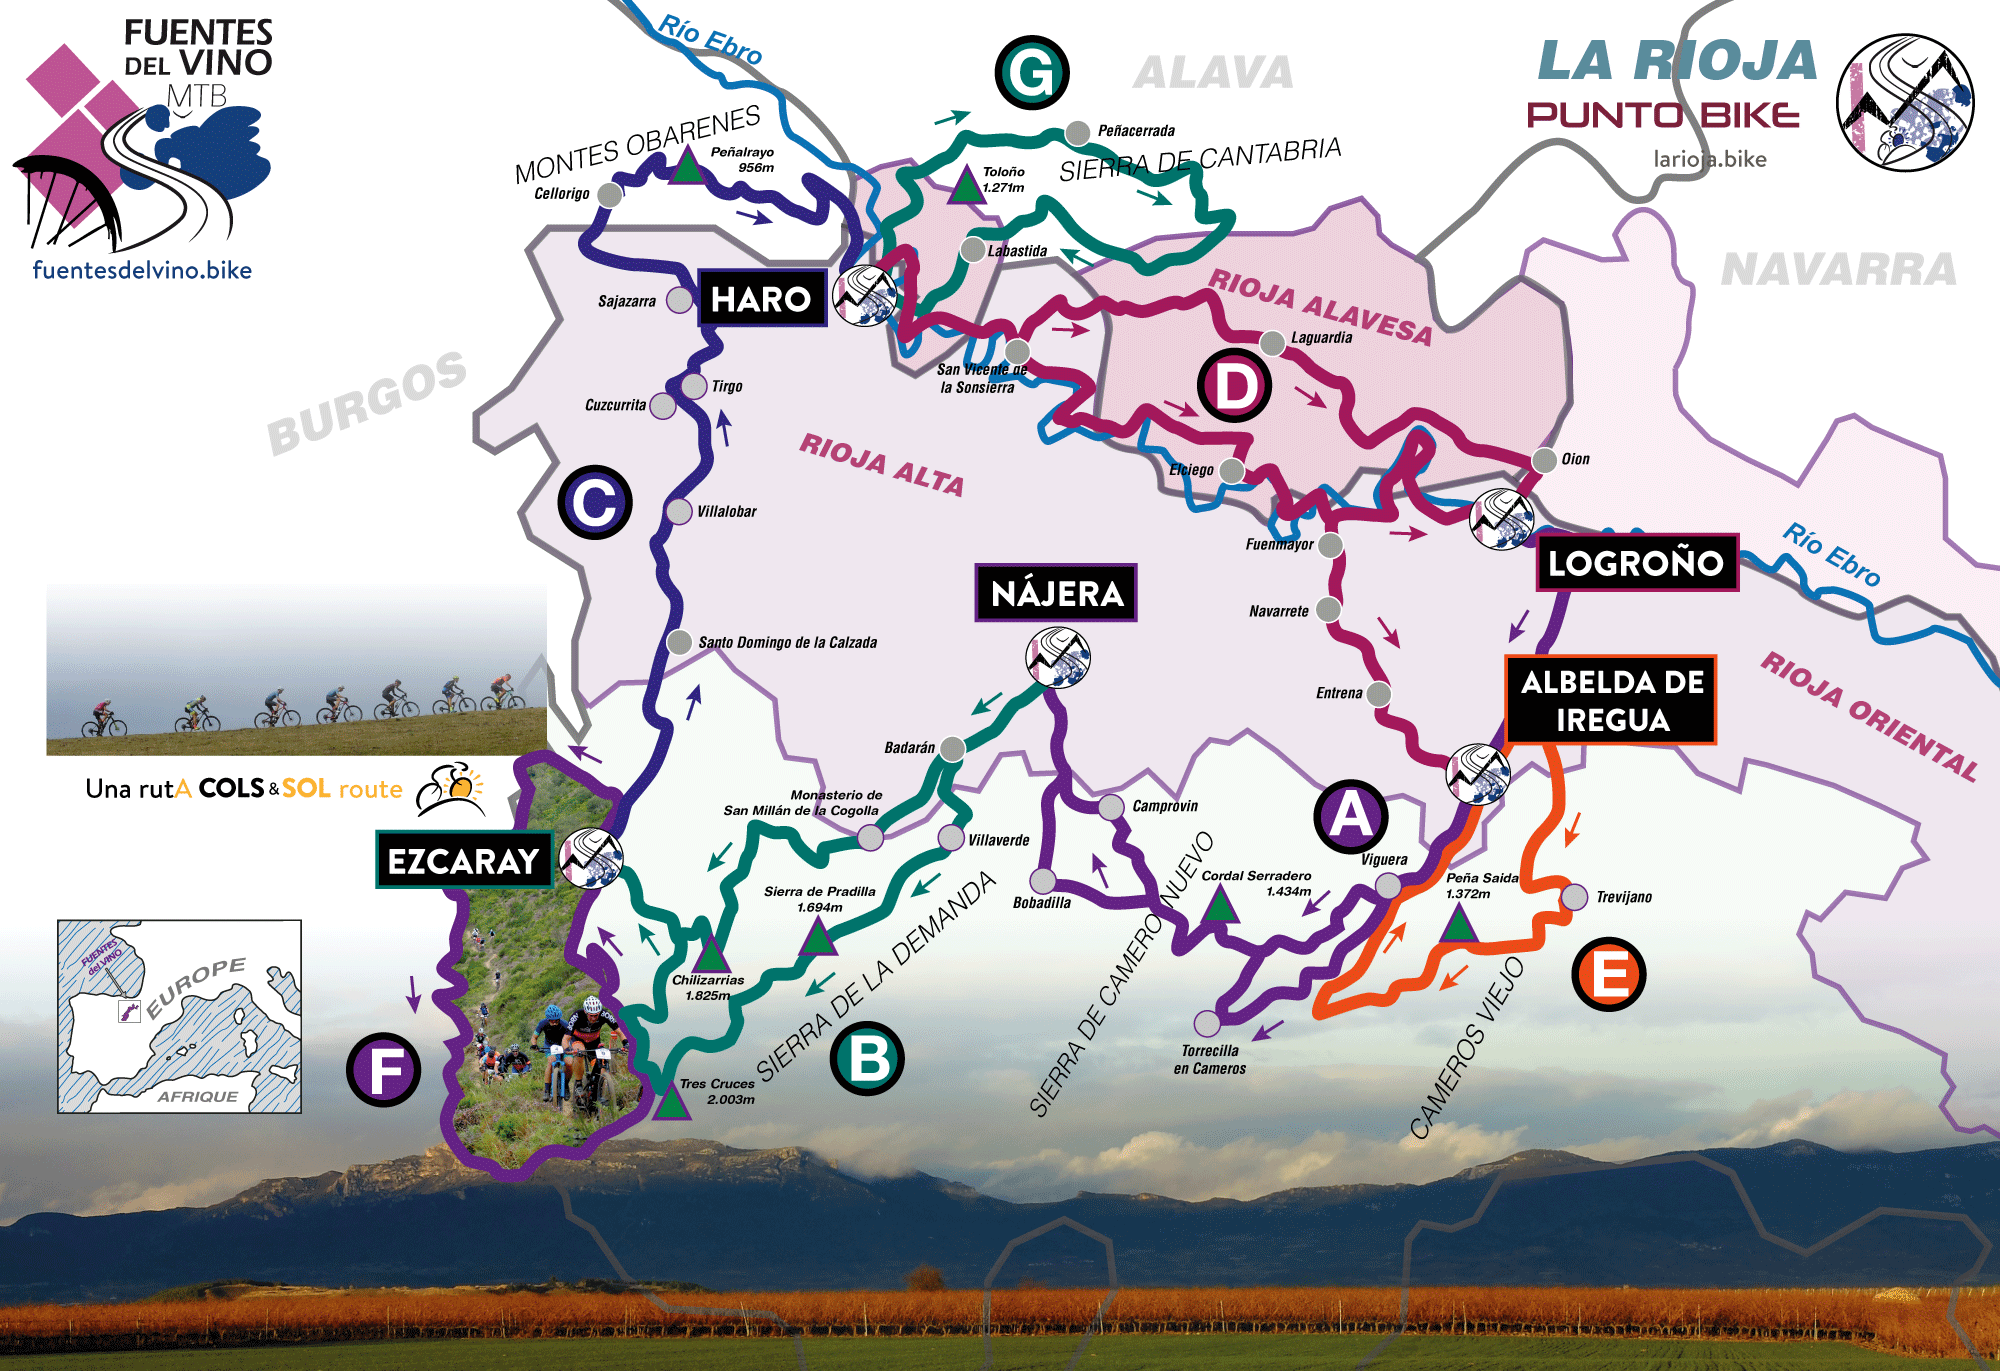 Fuentes-del-Vino-MTB-mapa